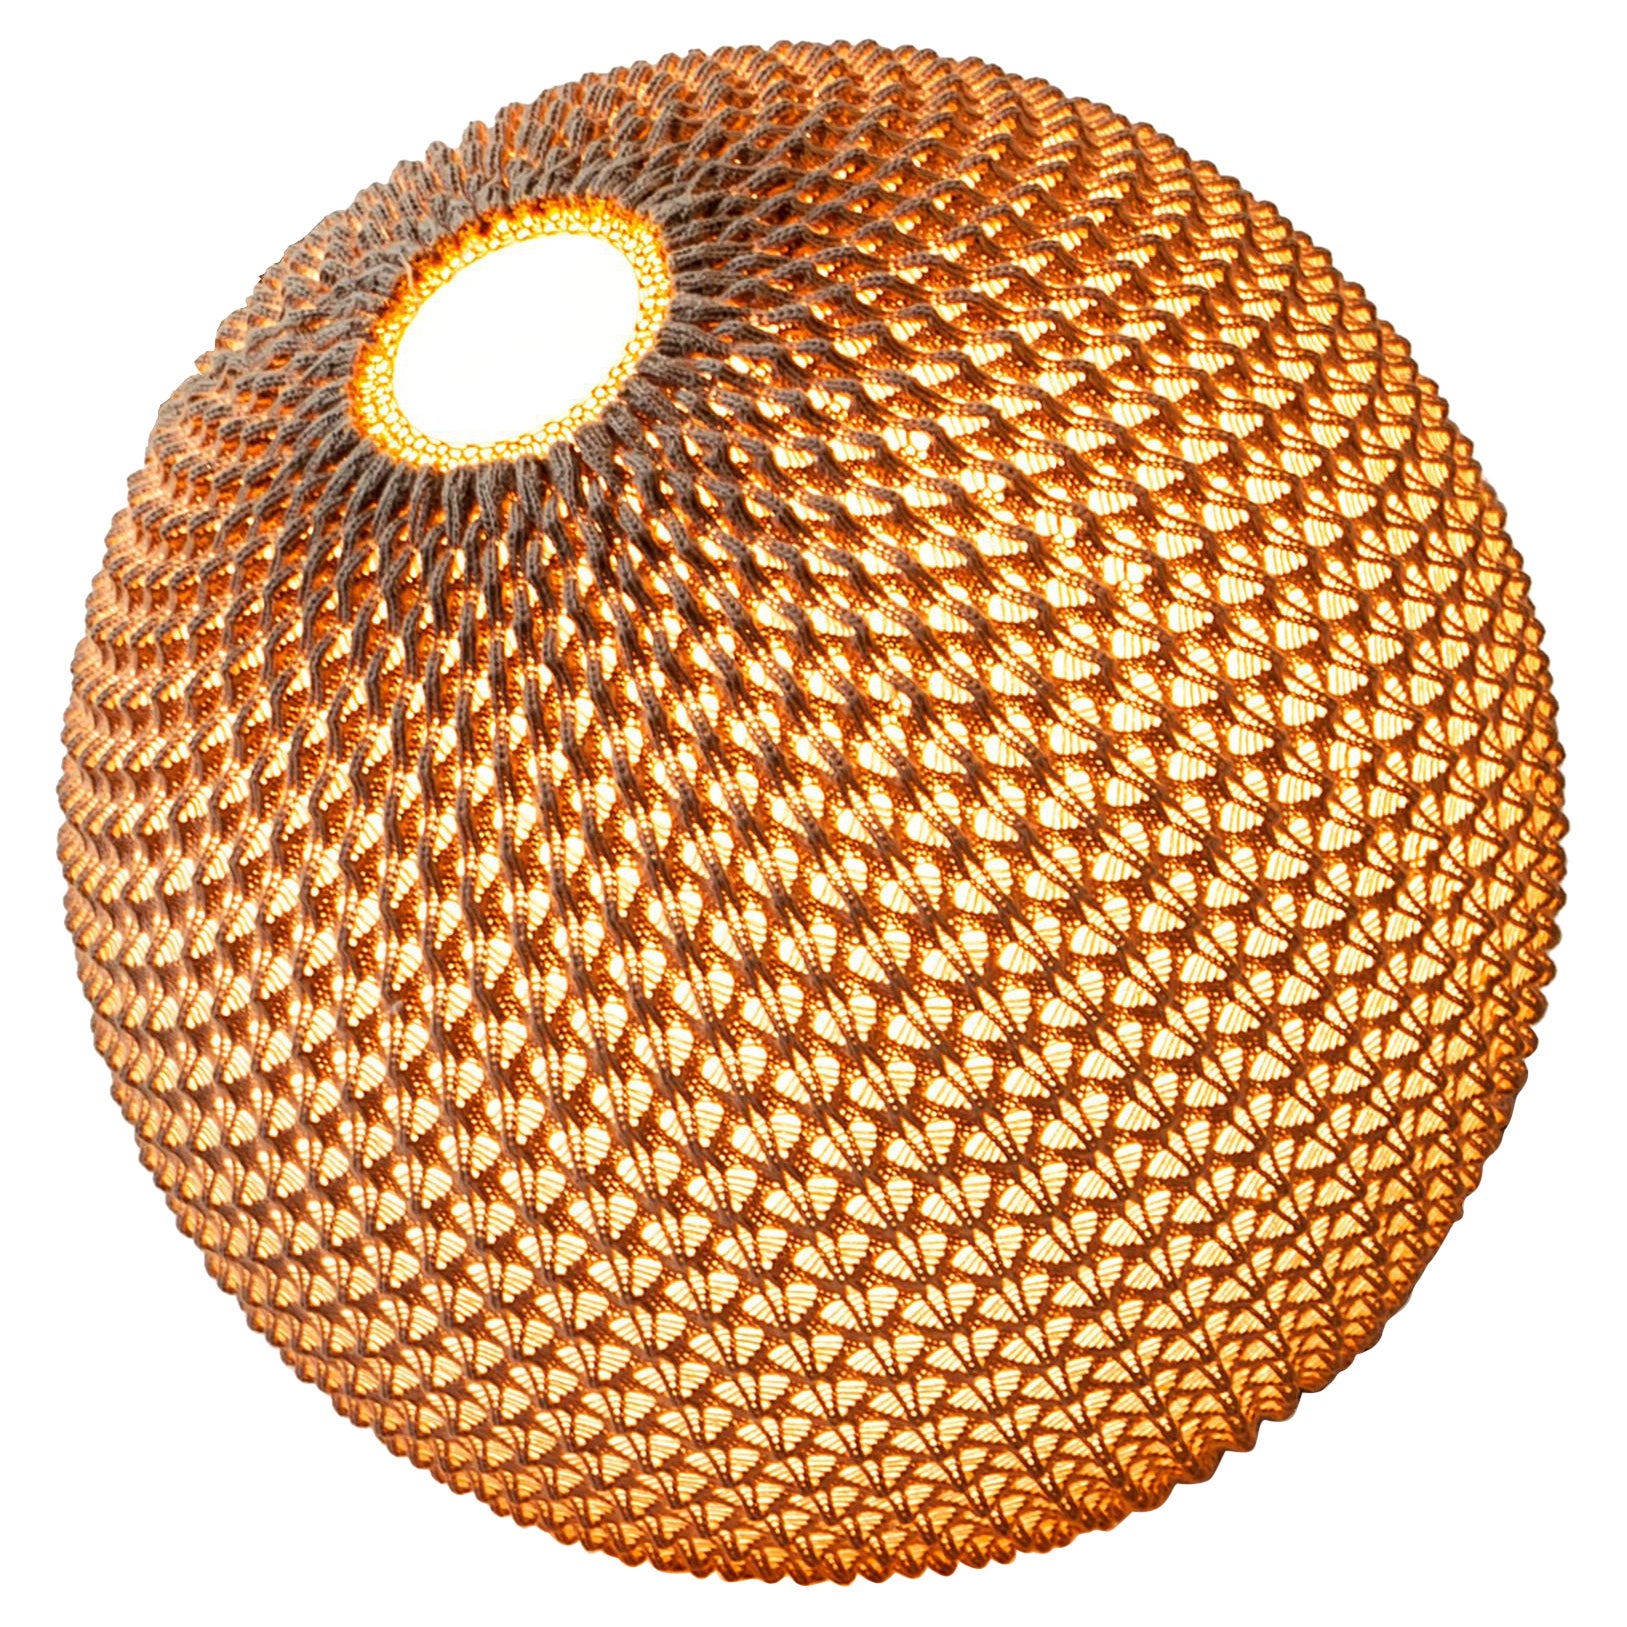 Knitted Floor lamp  -  Large size 50cm diameter